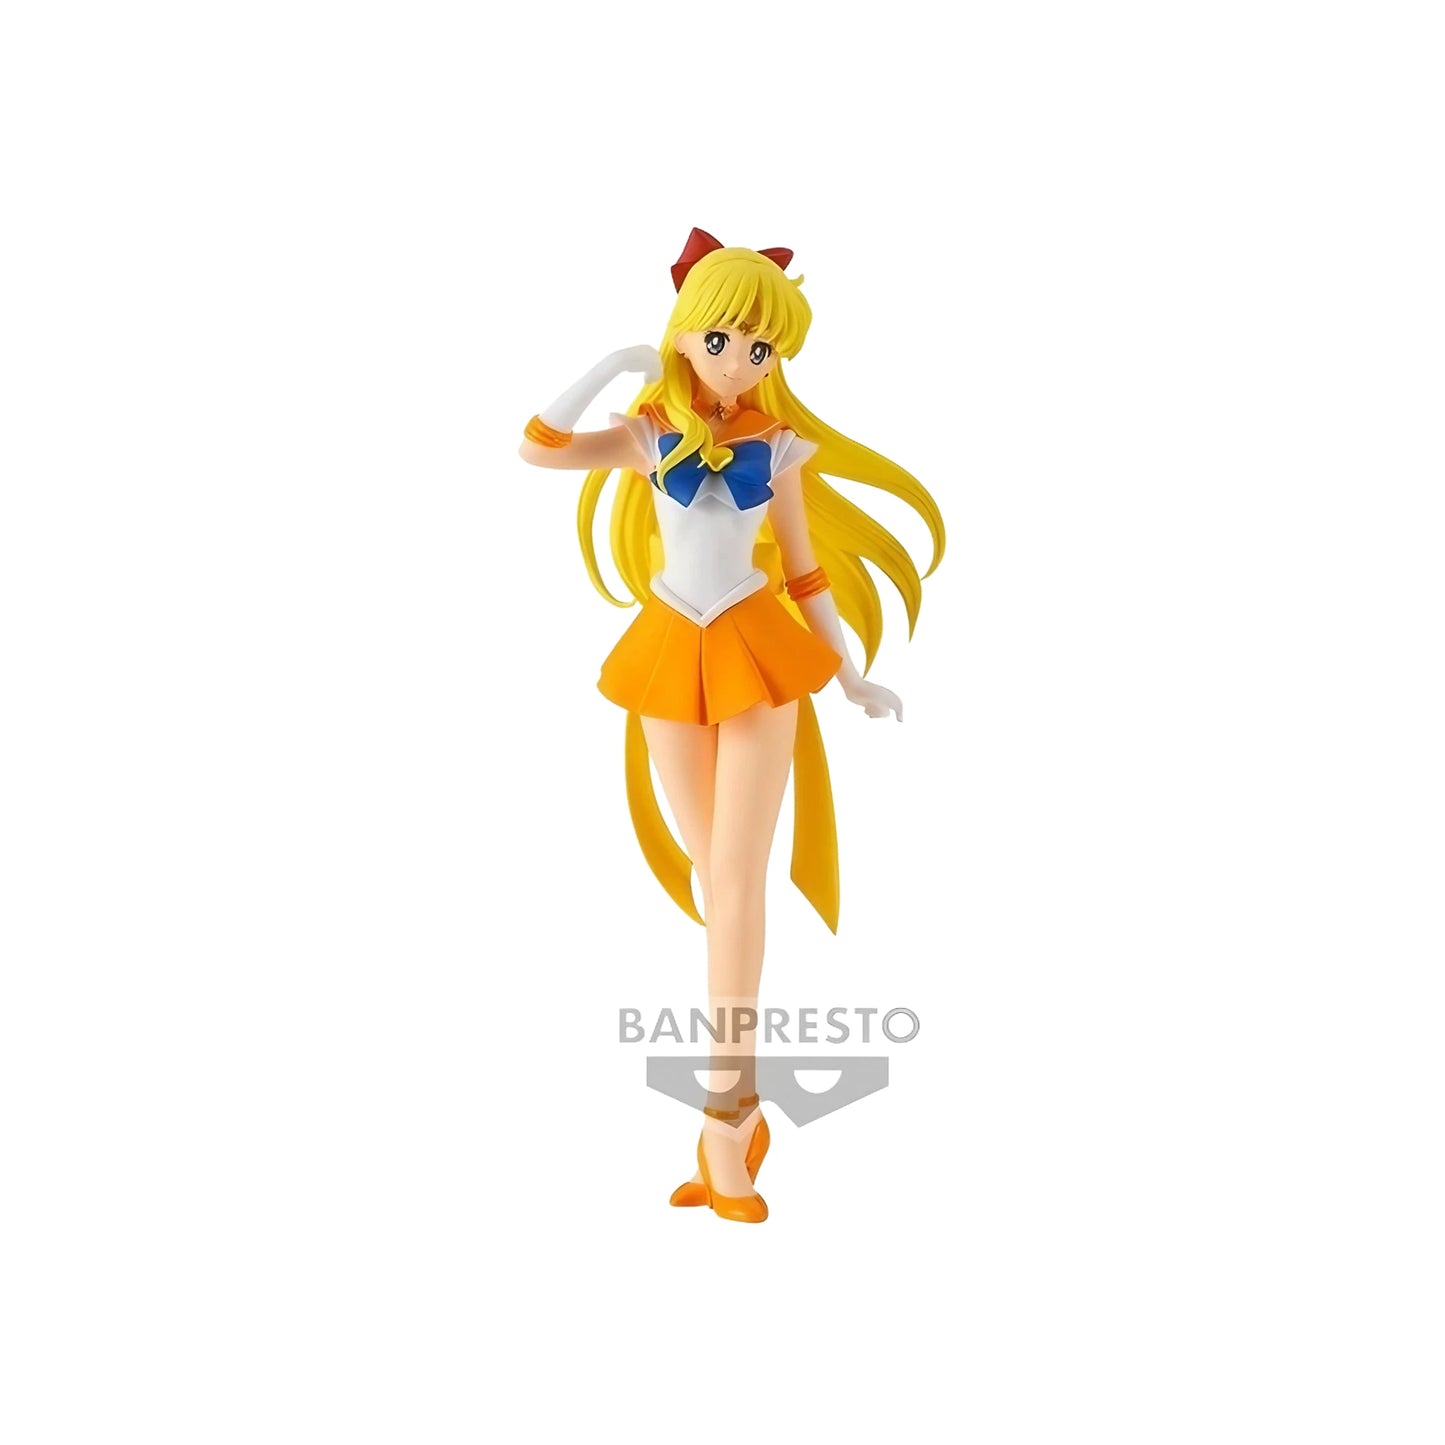 Sailor Venus Glitter & Glamours Banpresto Figure from the Sailor Moon series on display